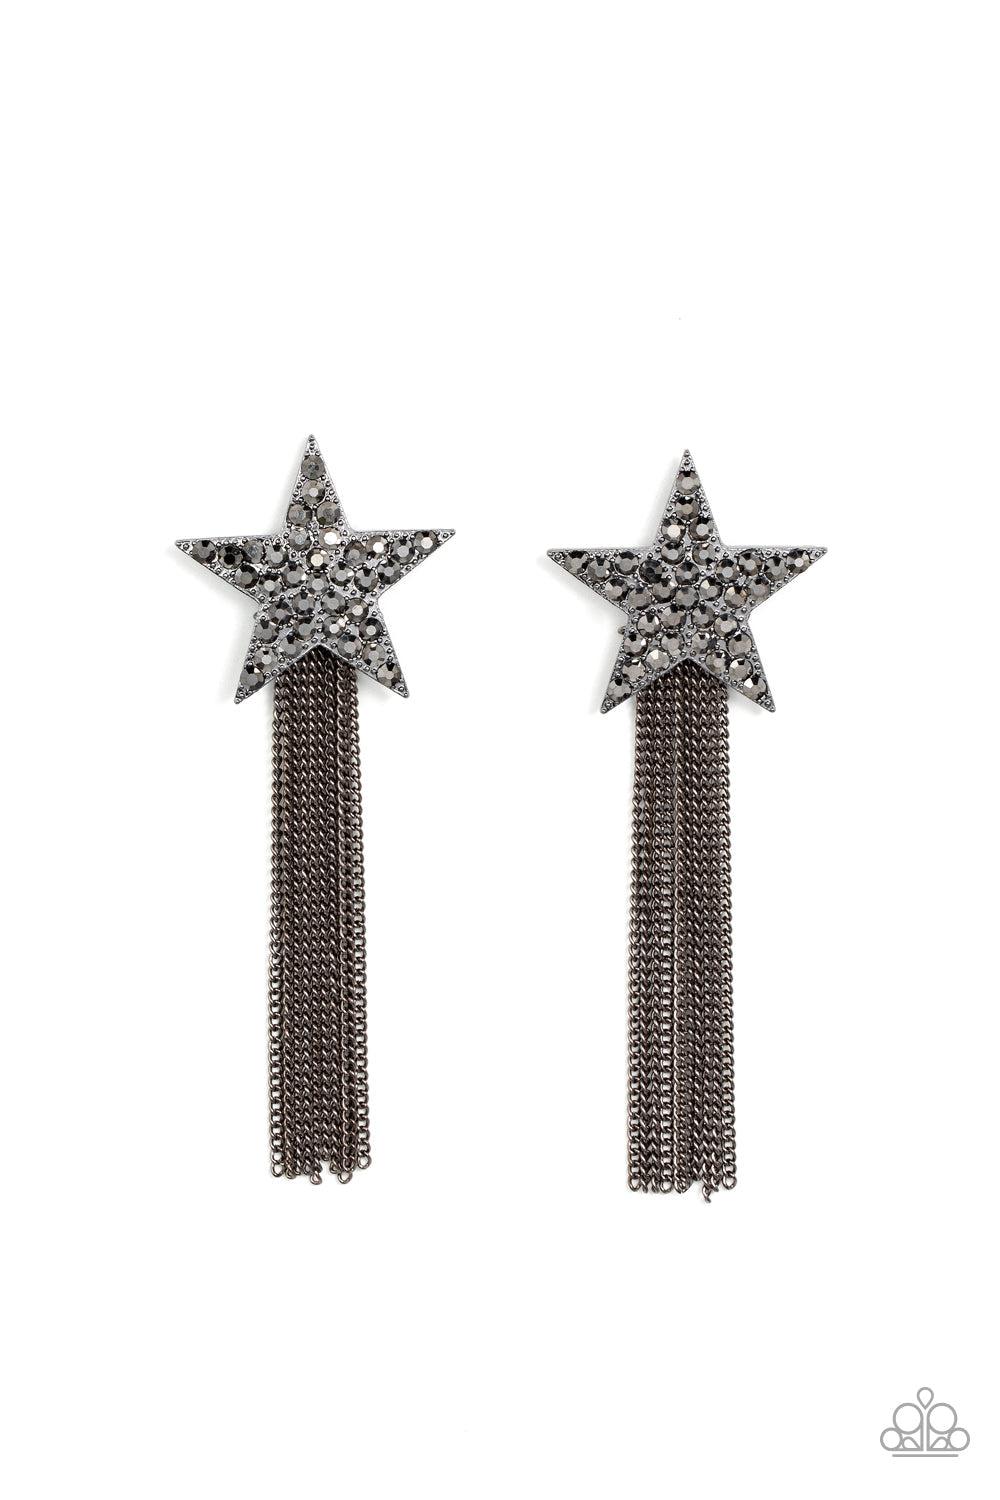 Superstar Solo Black &amp; Hematite Rhinestone Earrings - Paparazzi Accessories- lightbox - CarasShop.com - $5 Jewelry by Cara Jewels